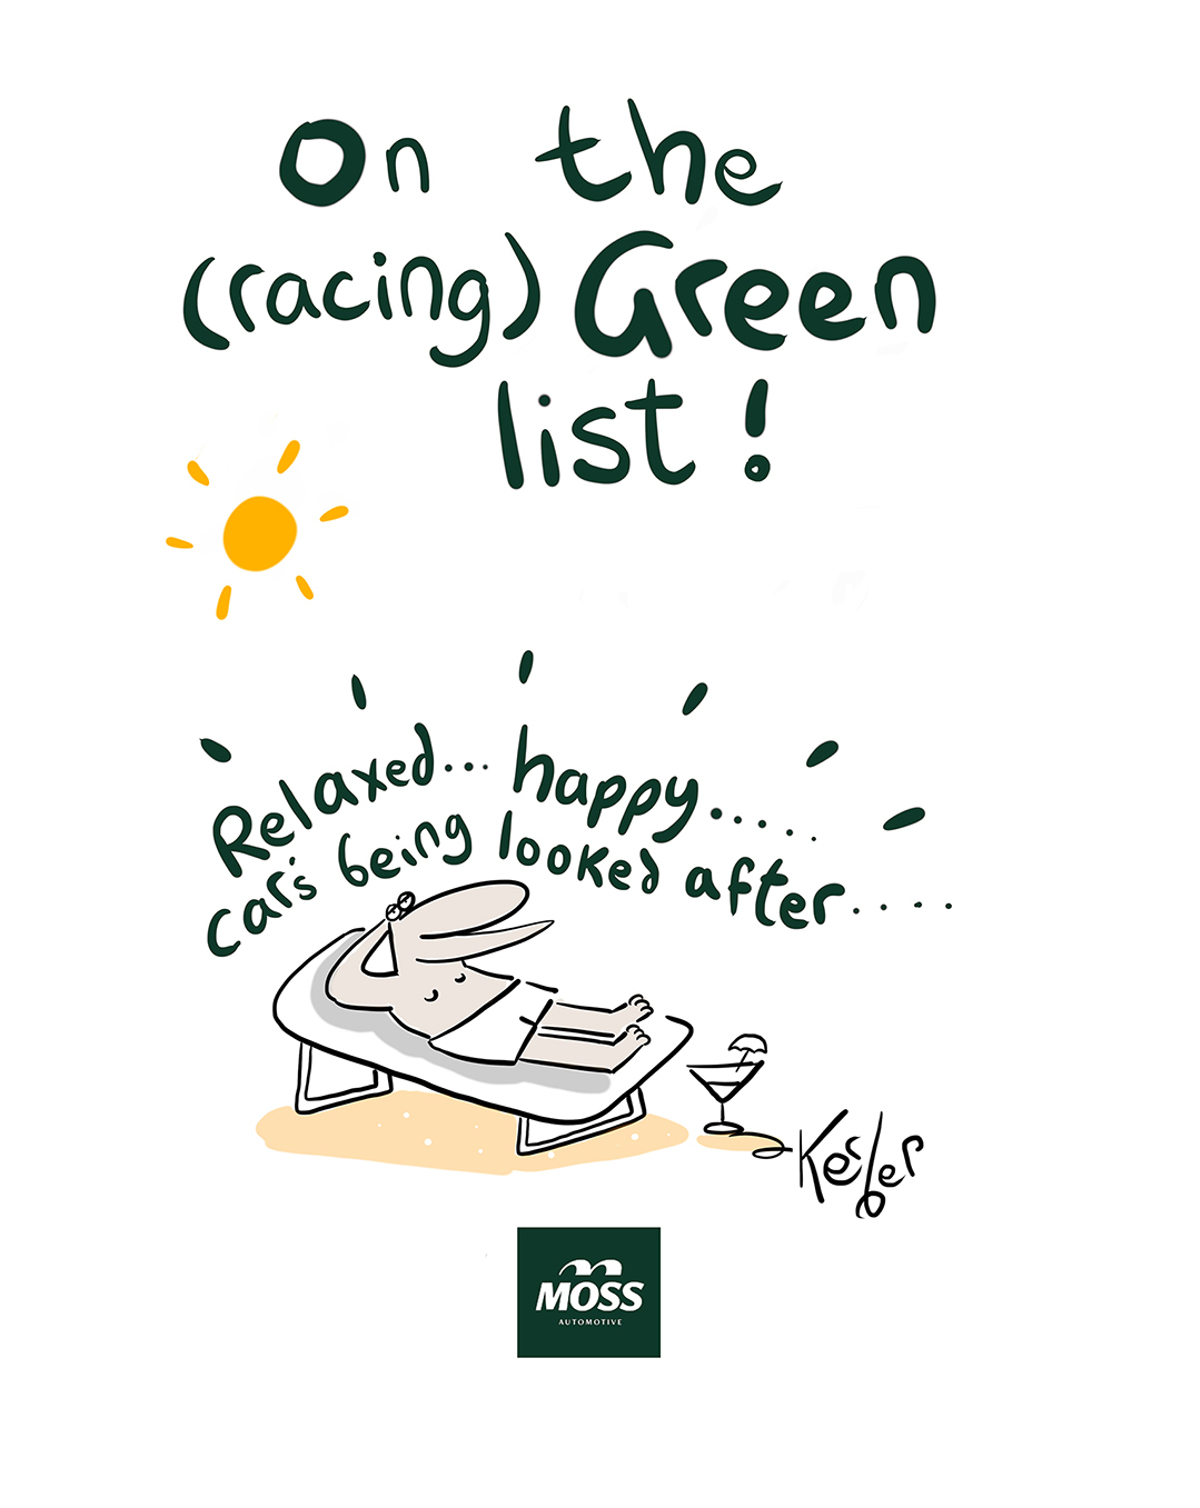 The Green List